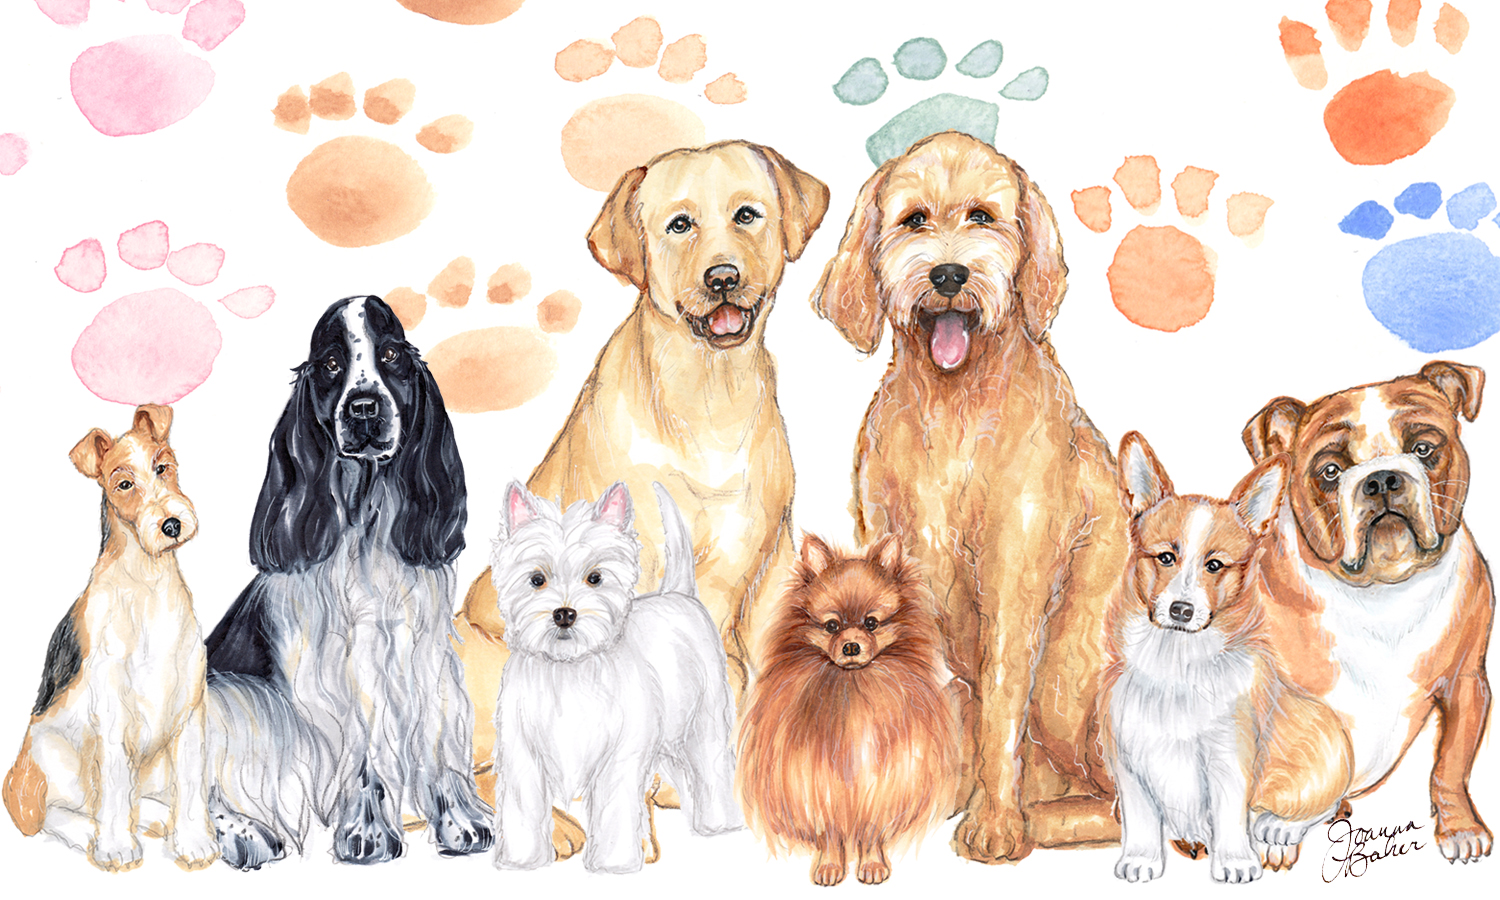 Dog Illustrations by Joanna Baker